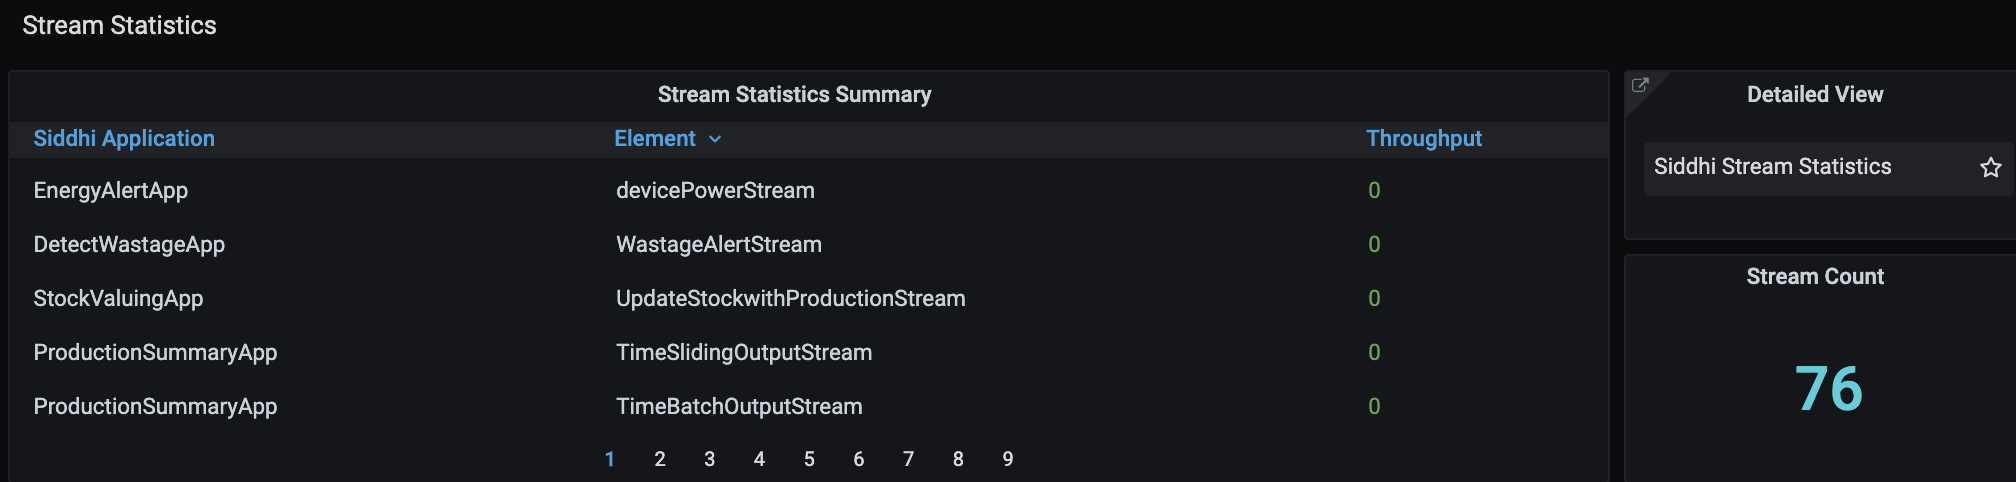 Stream Statistics